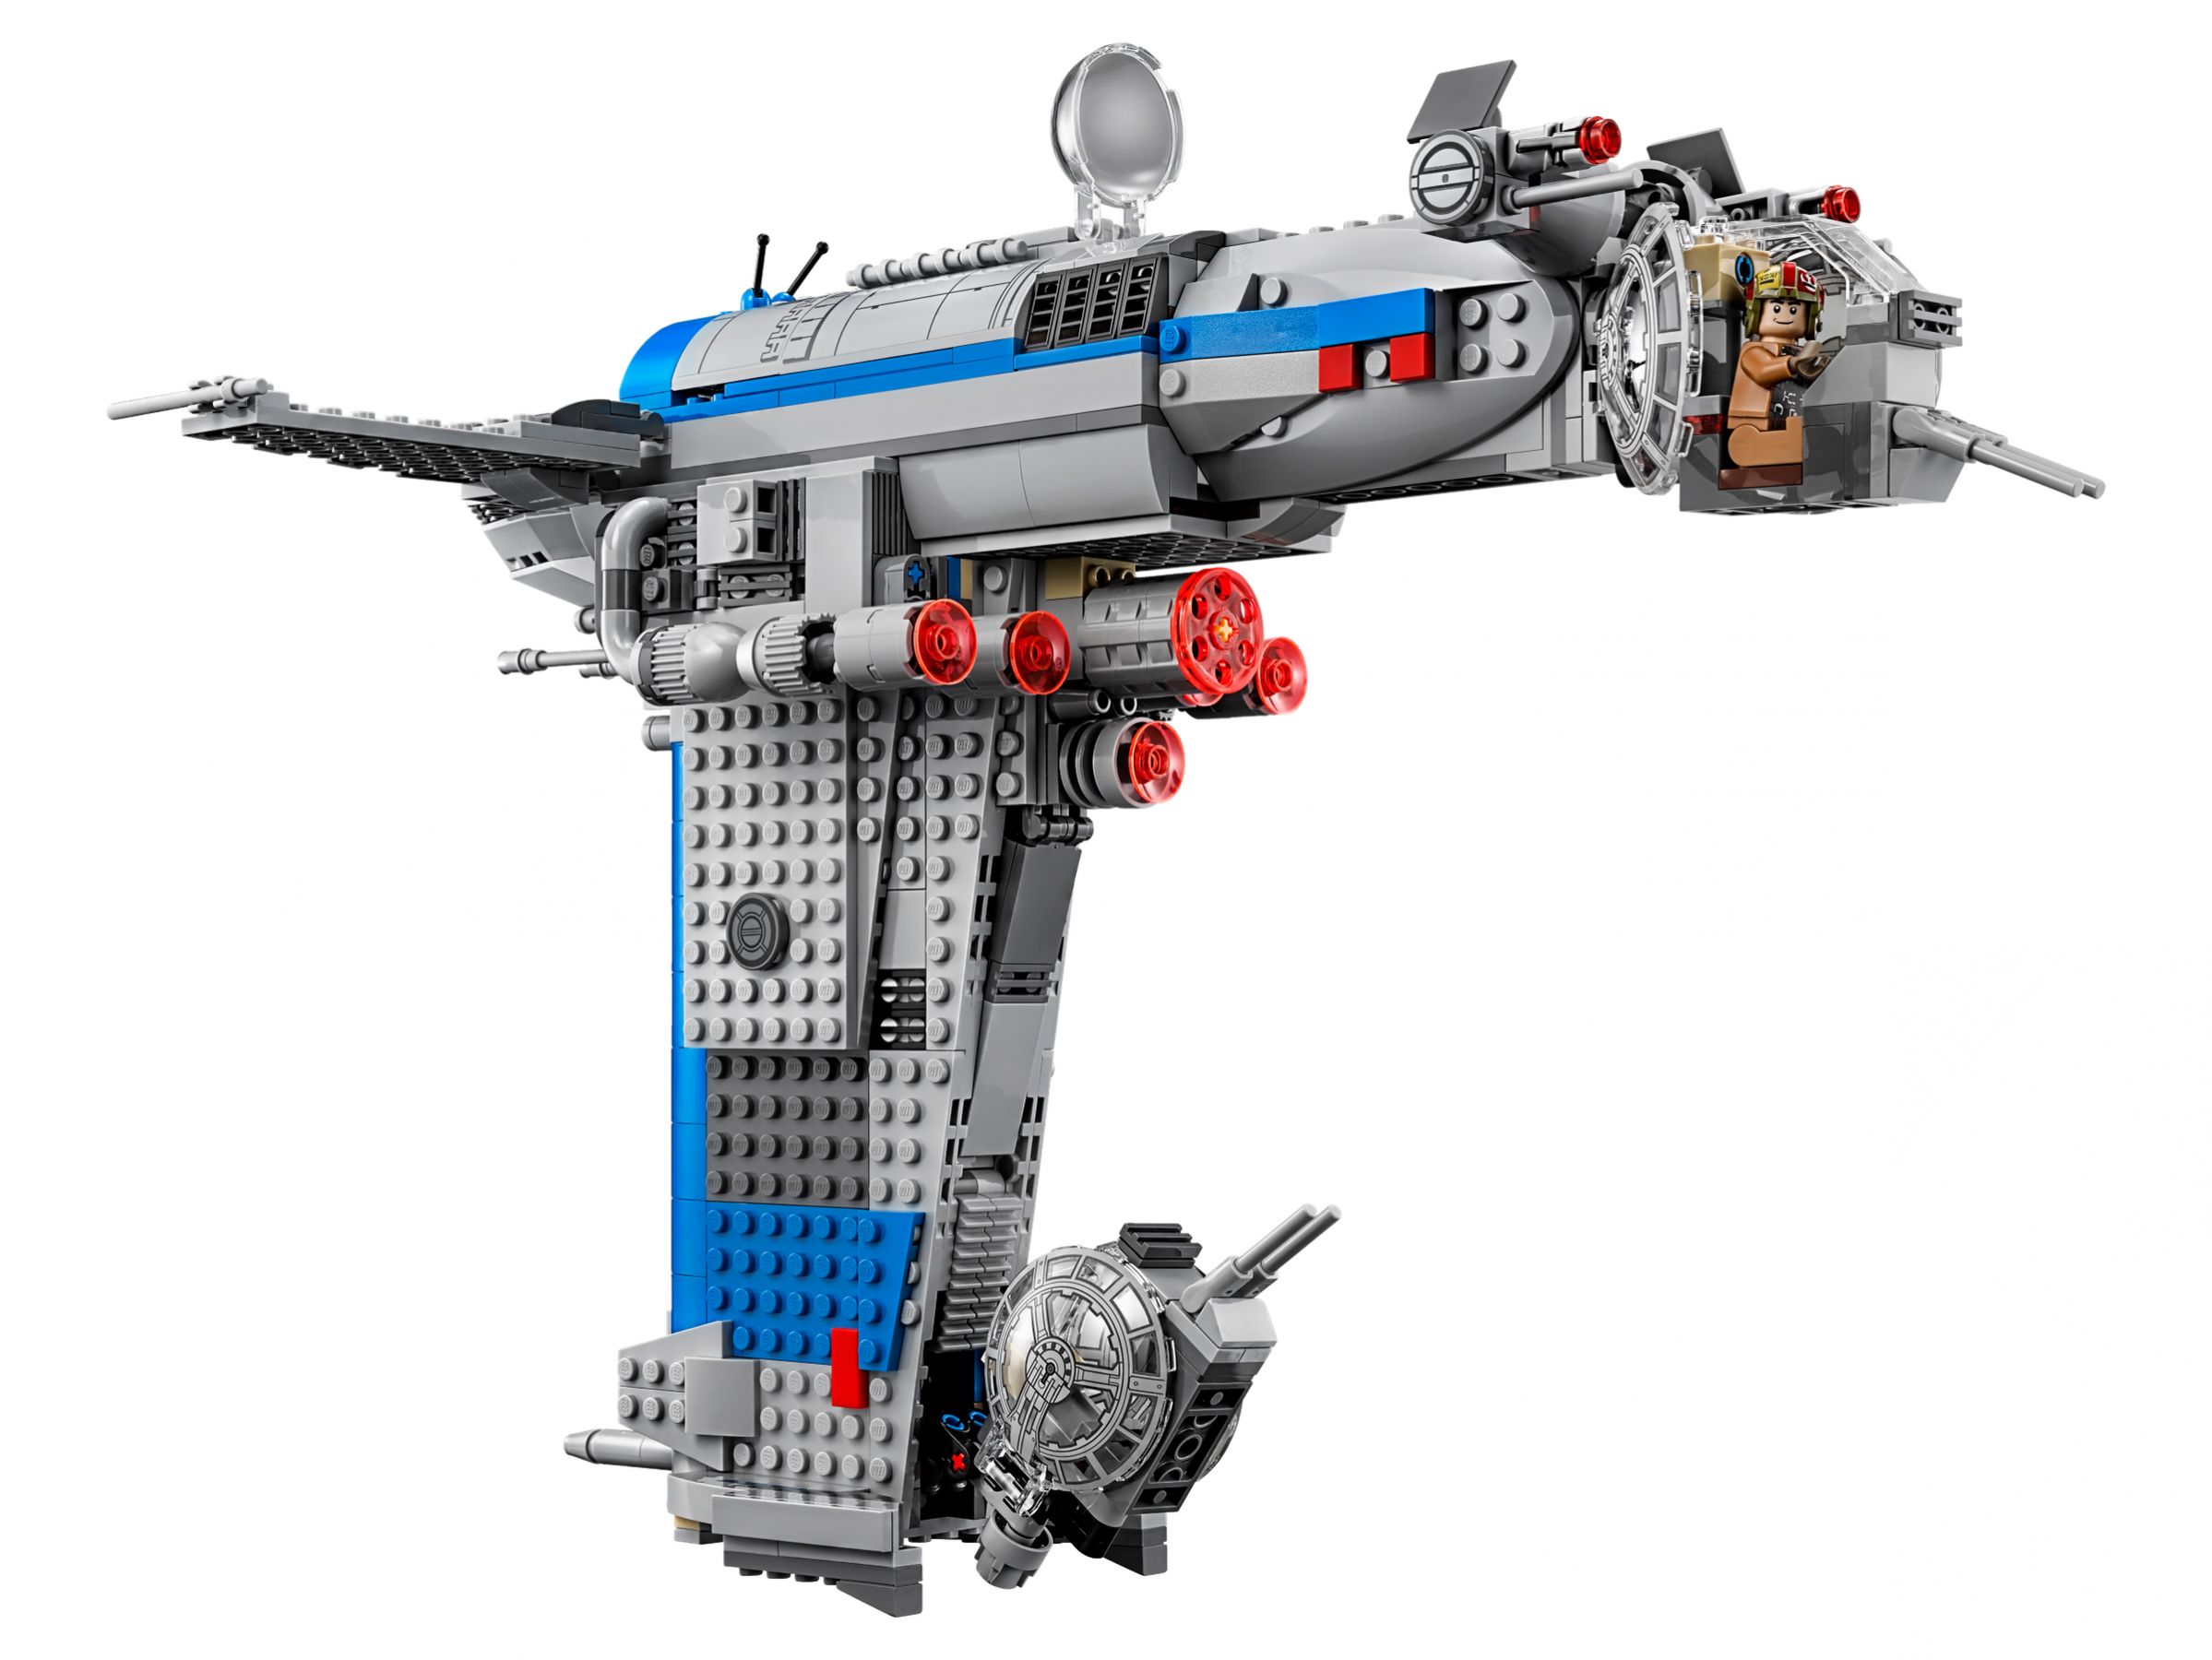 LEGO Star Wars 75188 Resistance Bomber LEGO_75188_alt3.jpg